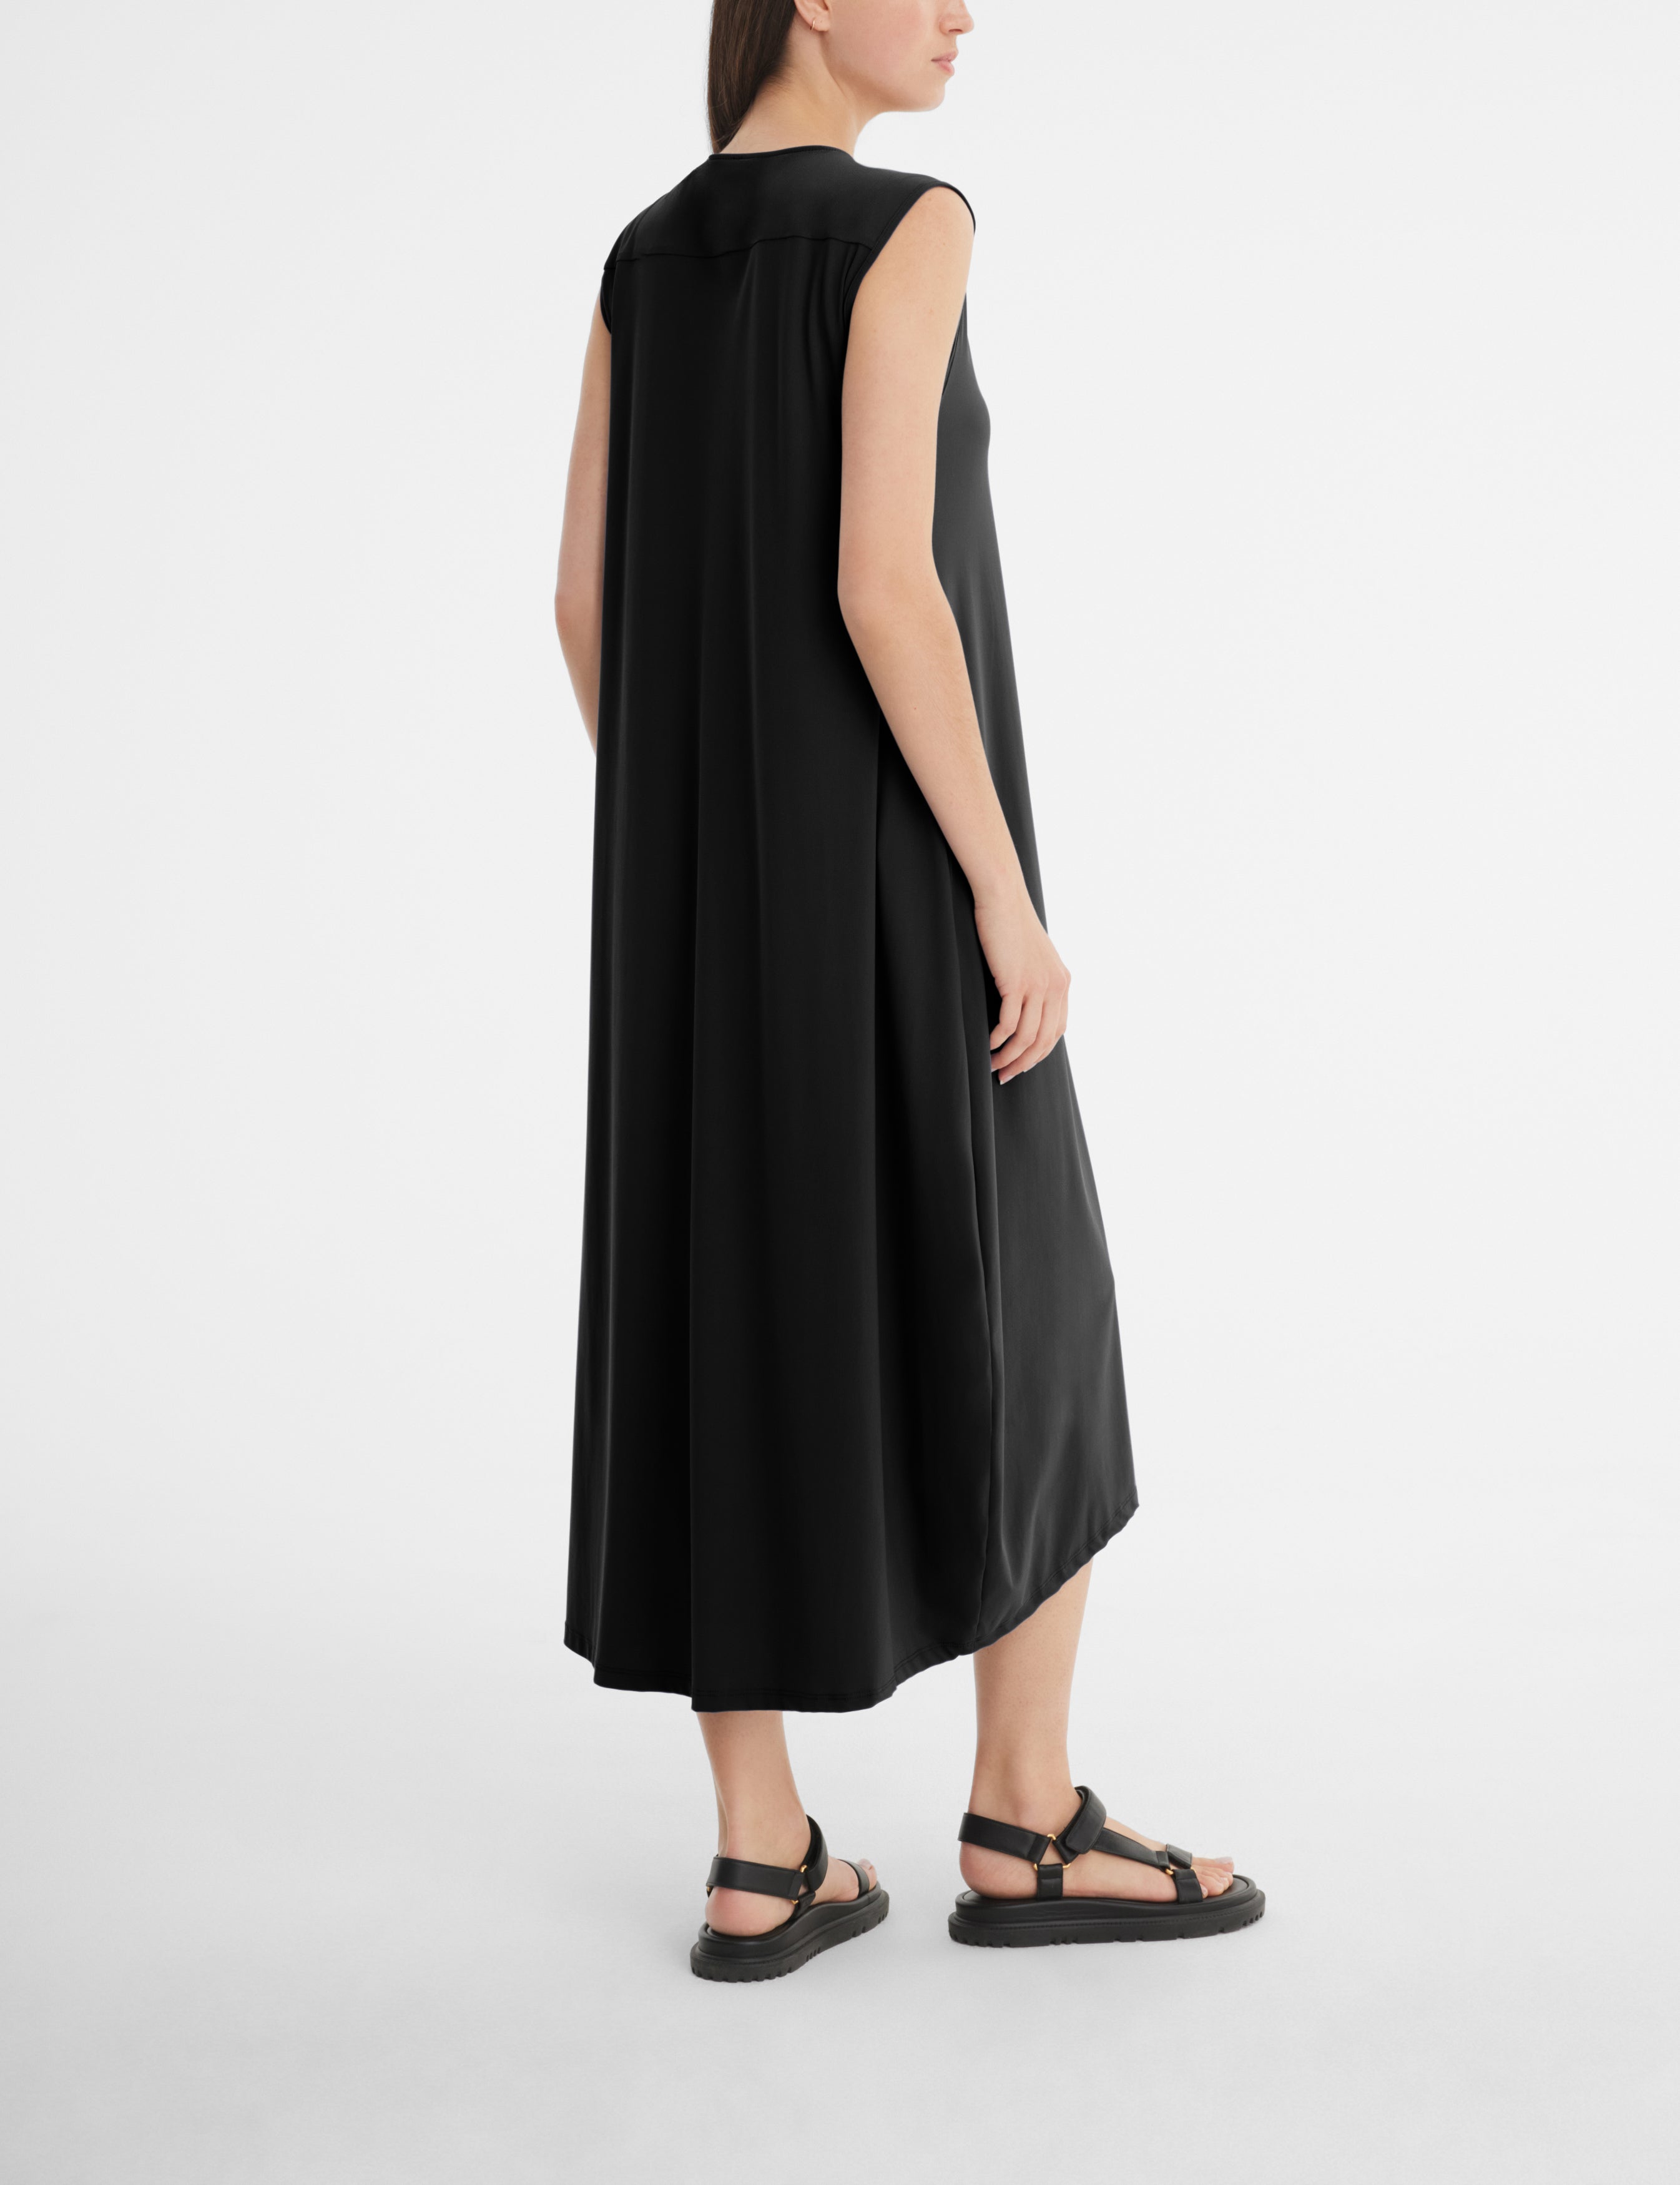 Sarah Pacini Long Dress  Black 241.13.060